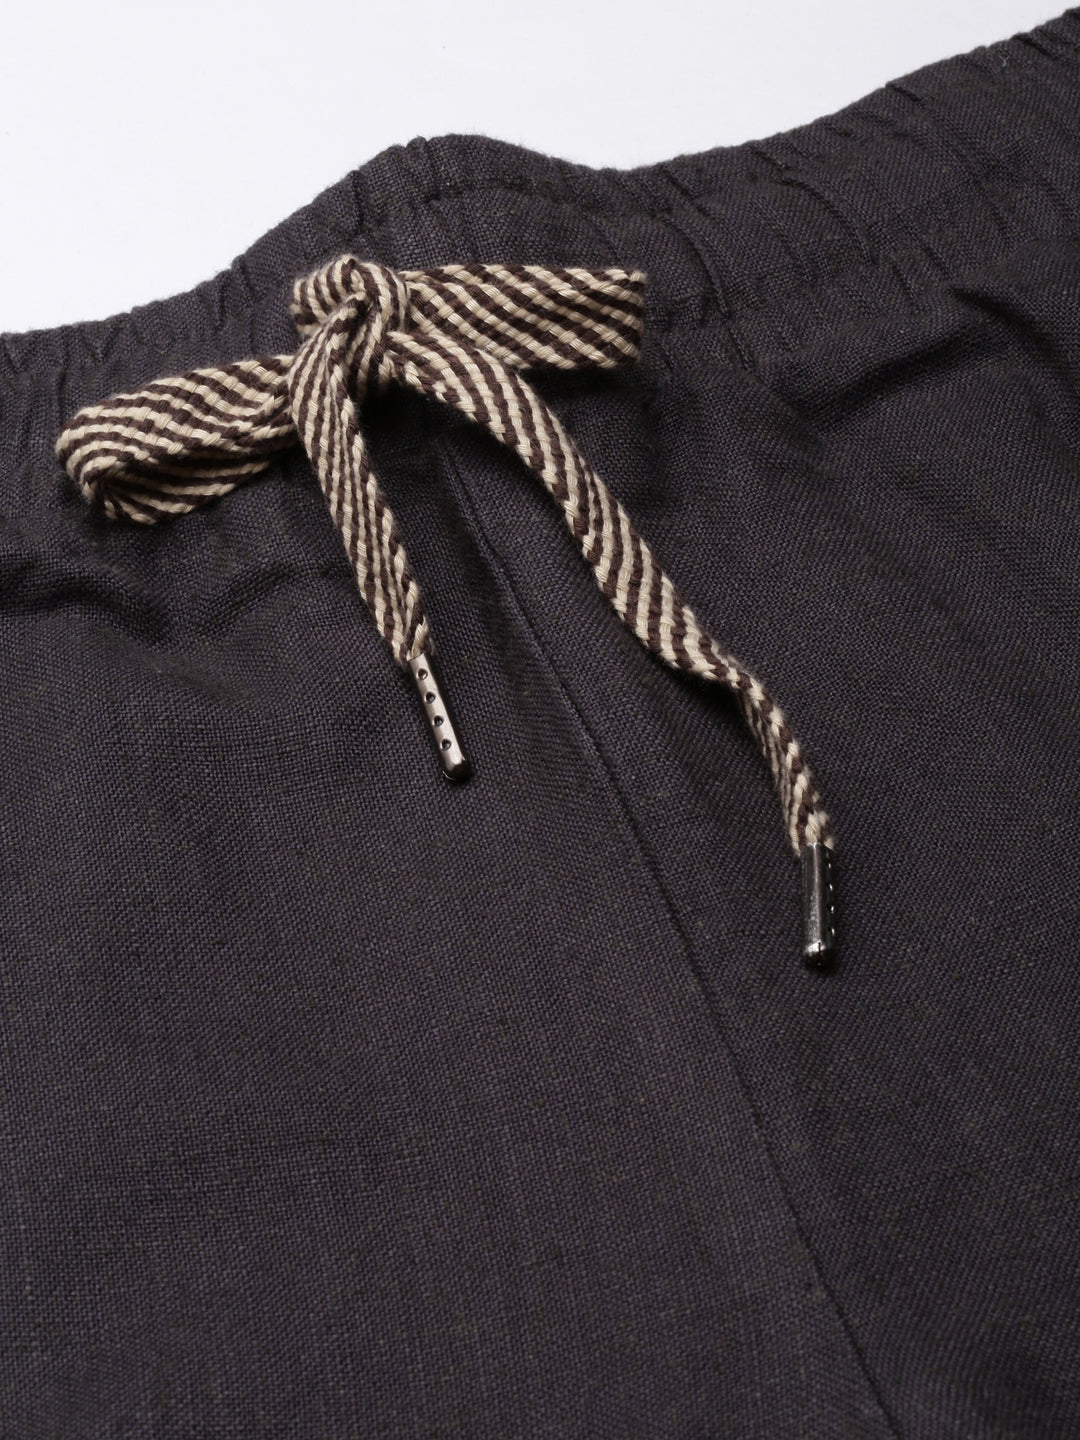 Women Black Solid Parallel Trouser